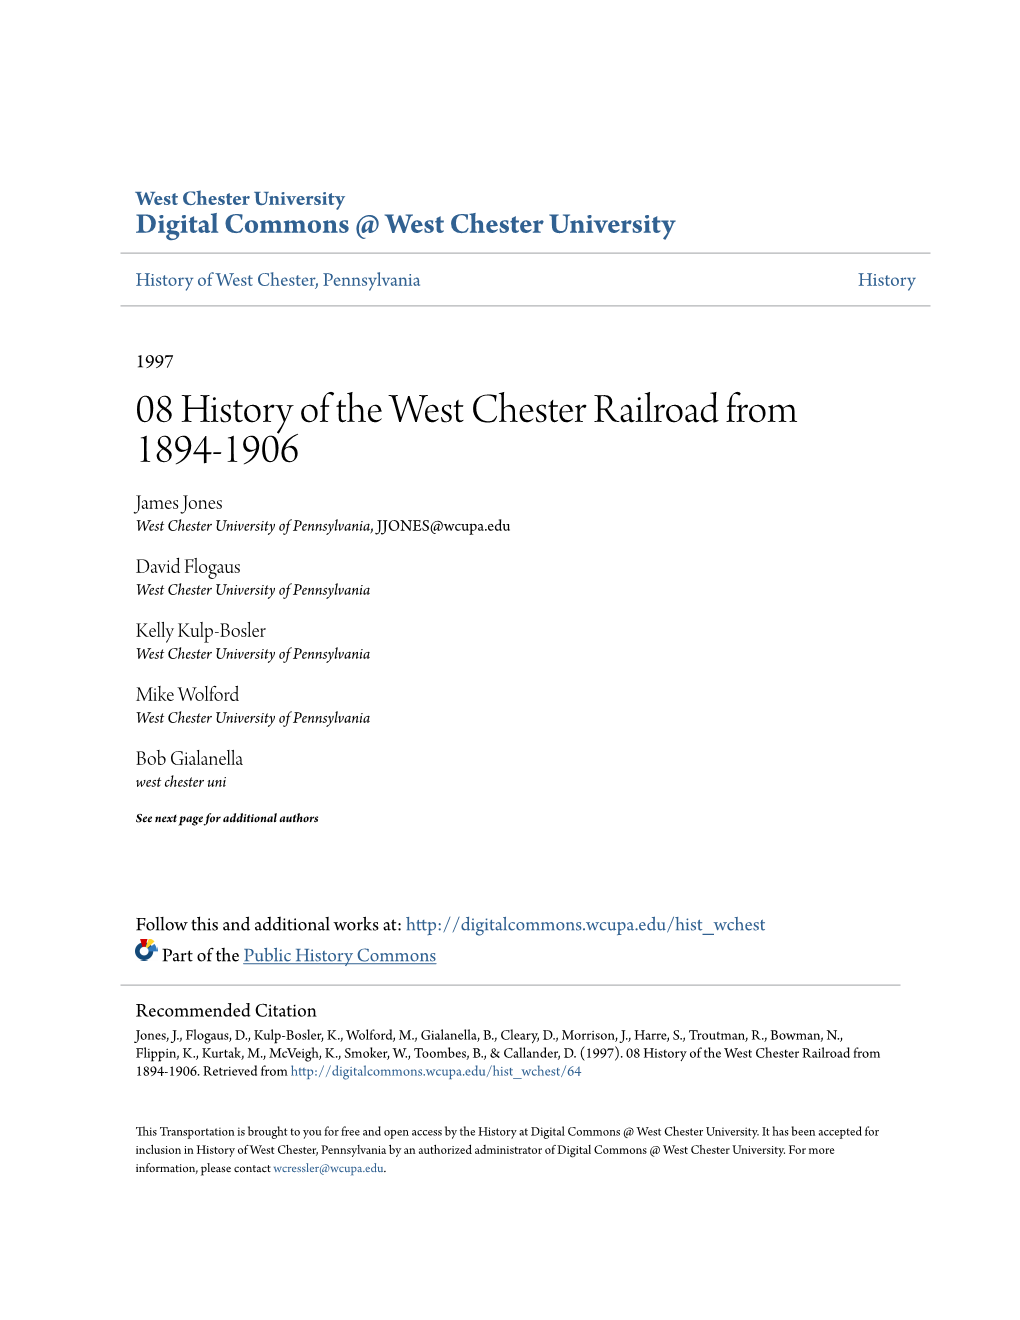 08 History of the West Chester Railroad from 1894-1906 James Jones West Chester University of Pennsylvania, JJONES@Wcupa.Edu